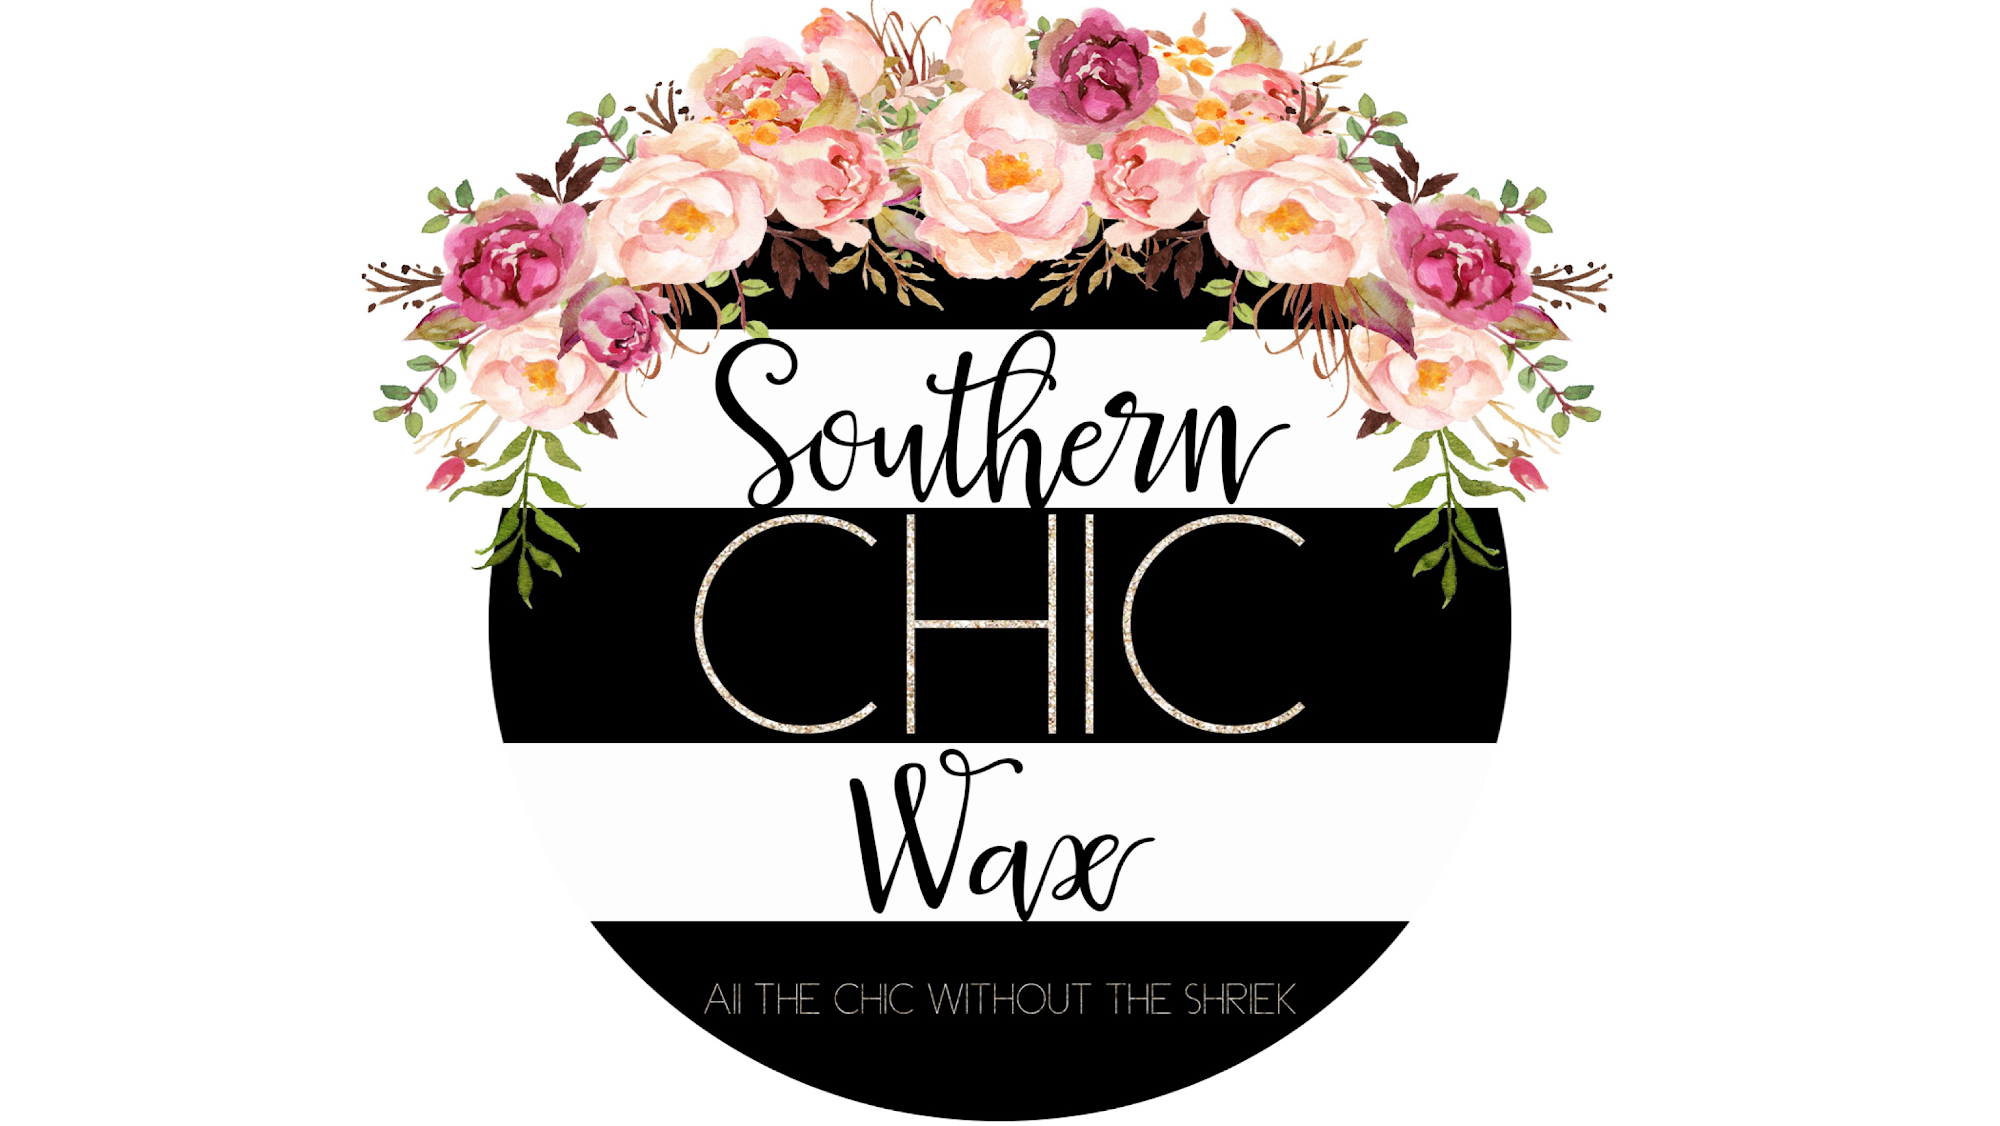 Southern Chic Wax